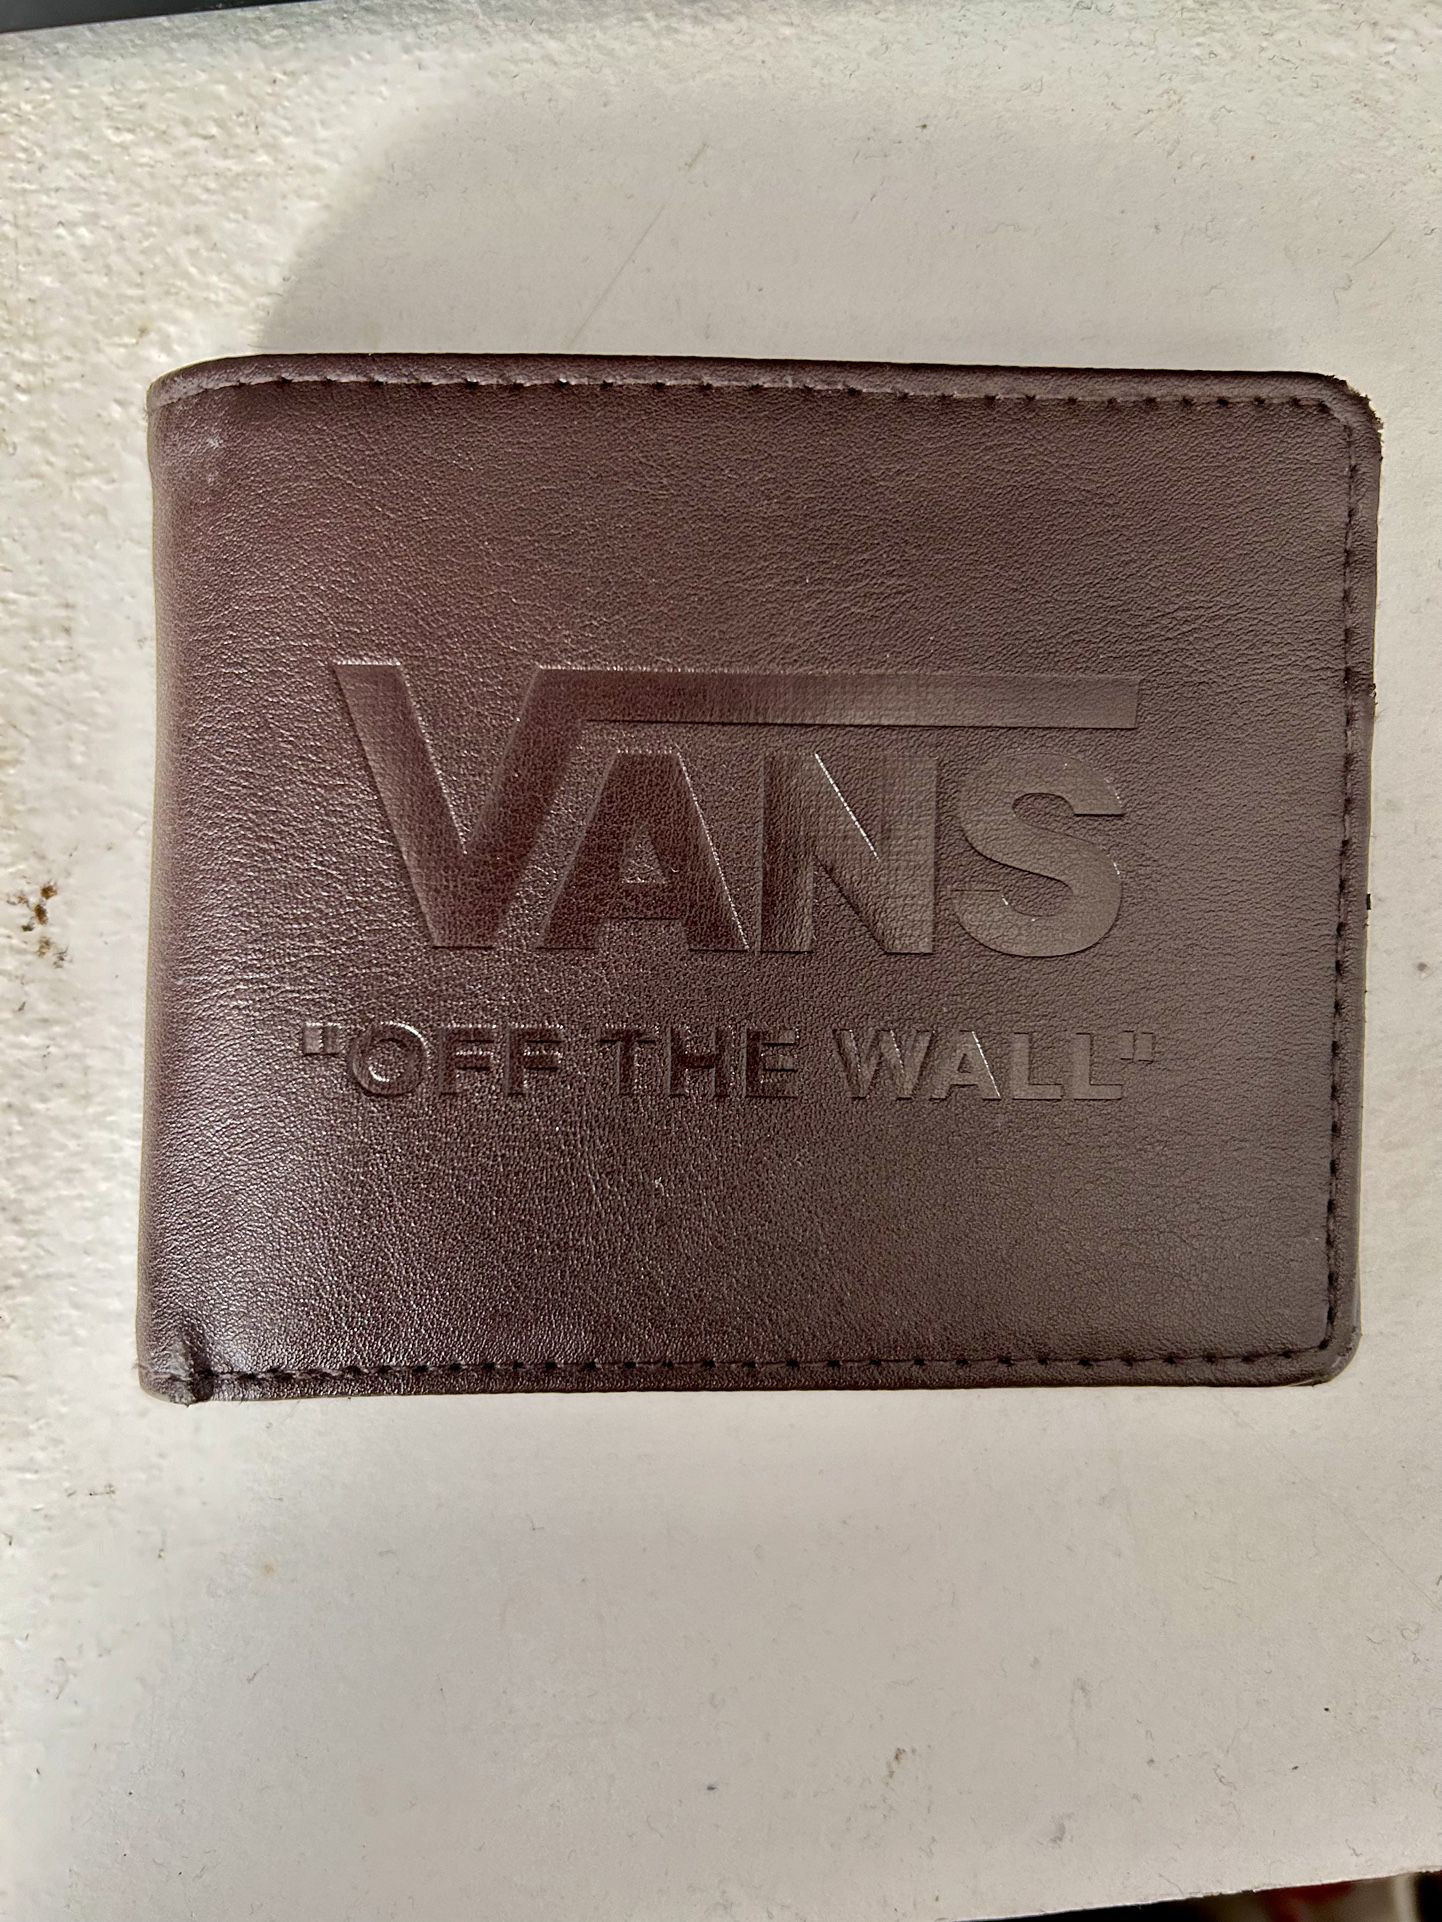 Vans Wallet (Brown)